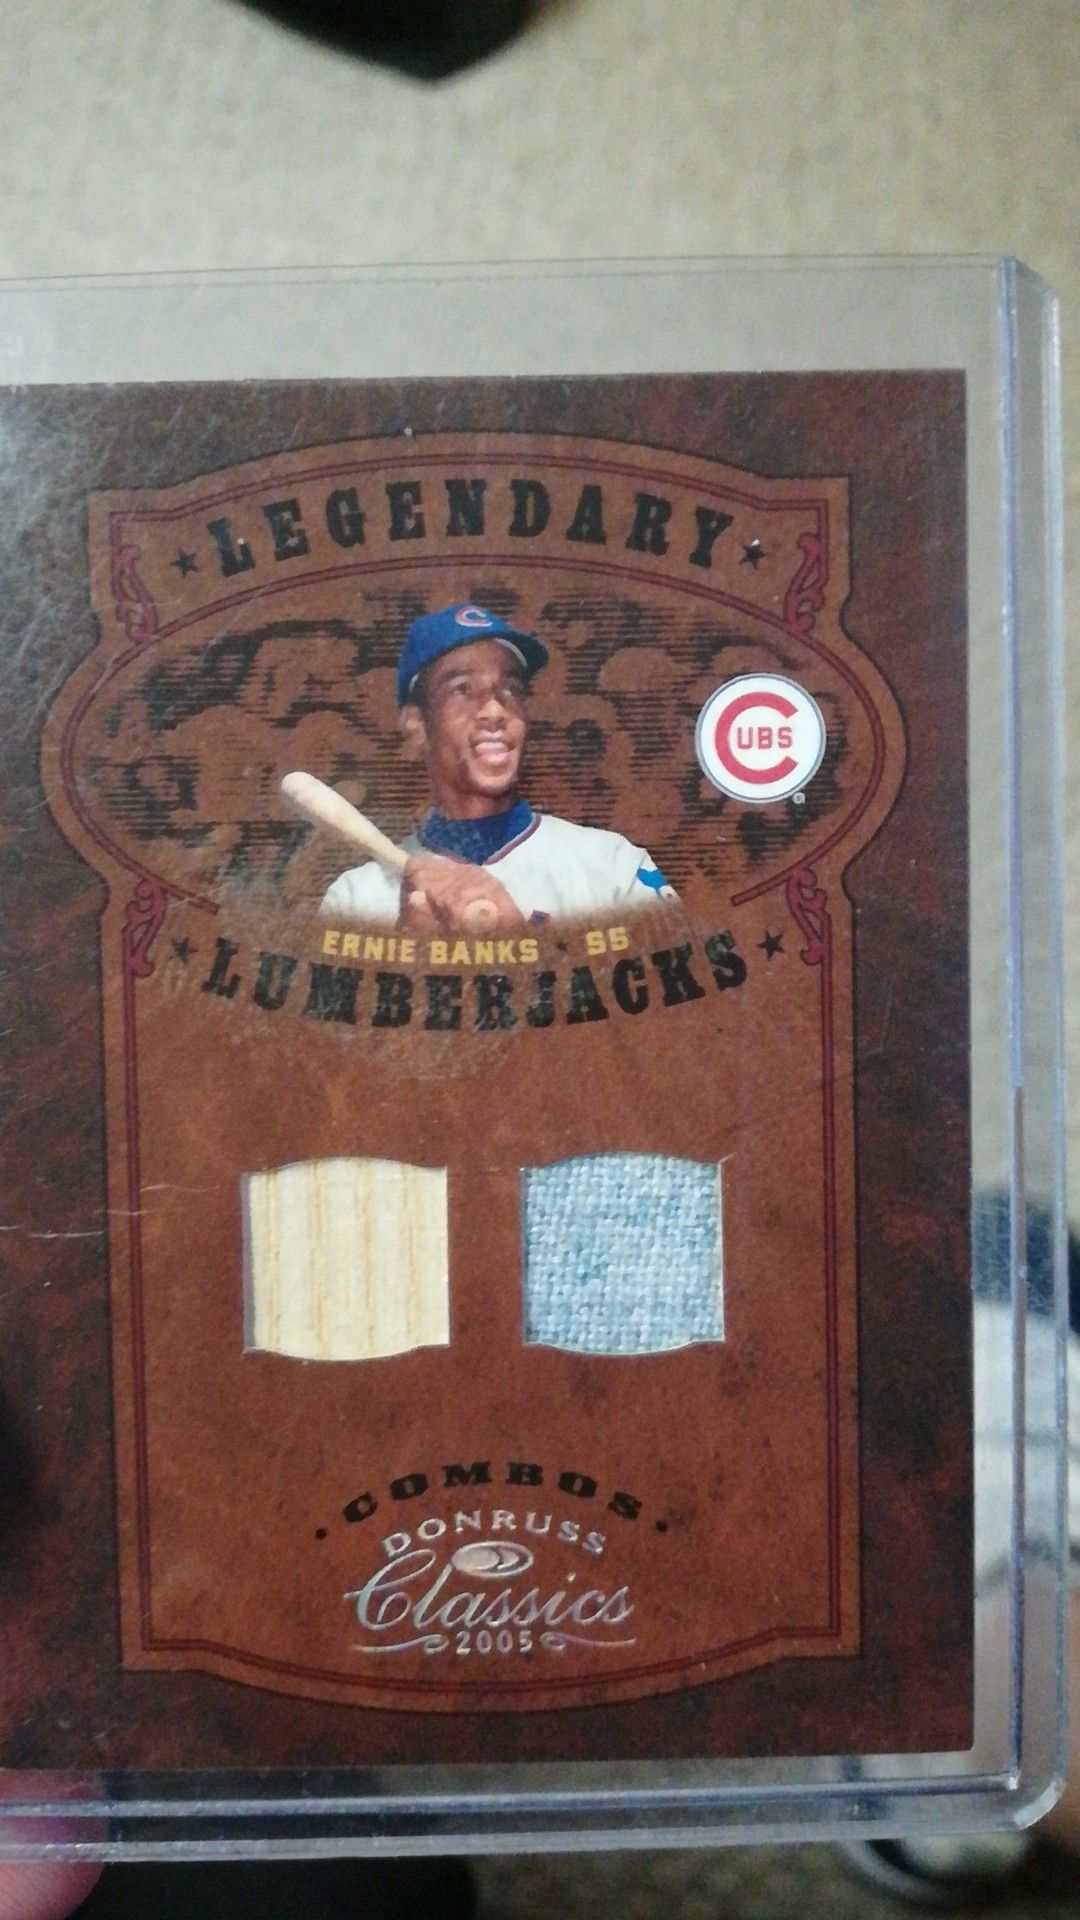 Ernie banks legendary lumberjacks jersey/bat card